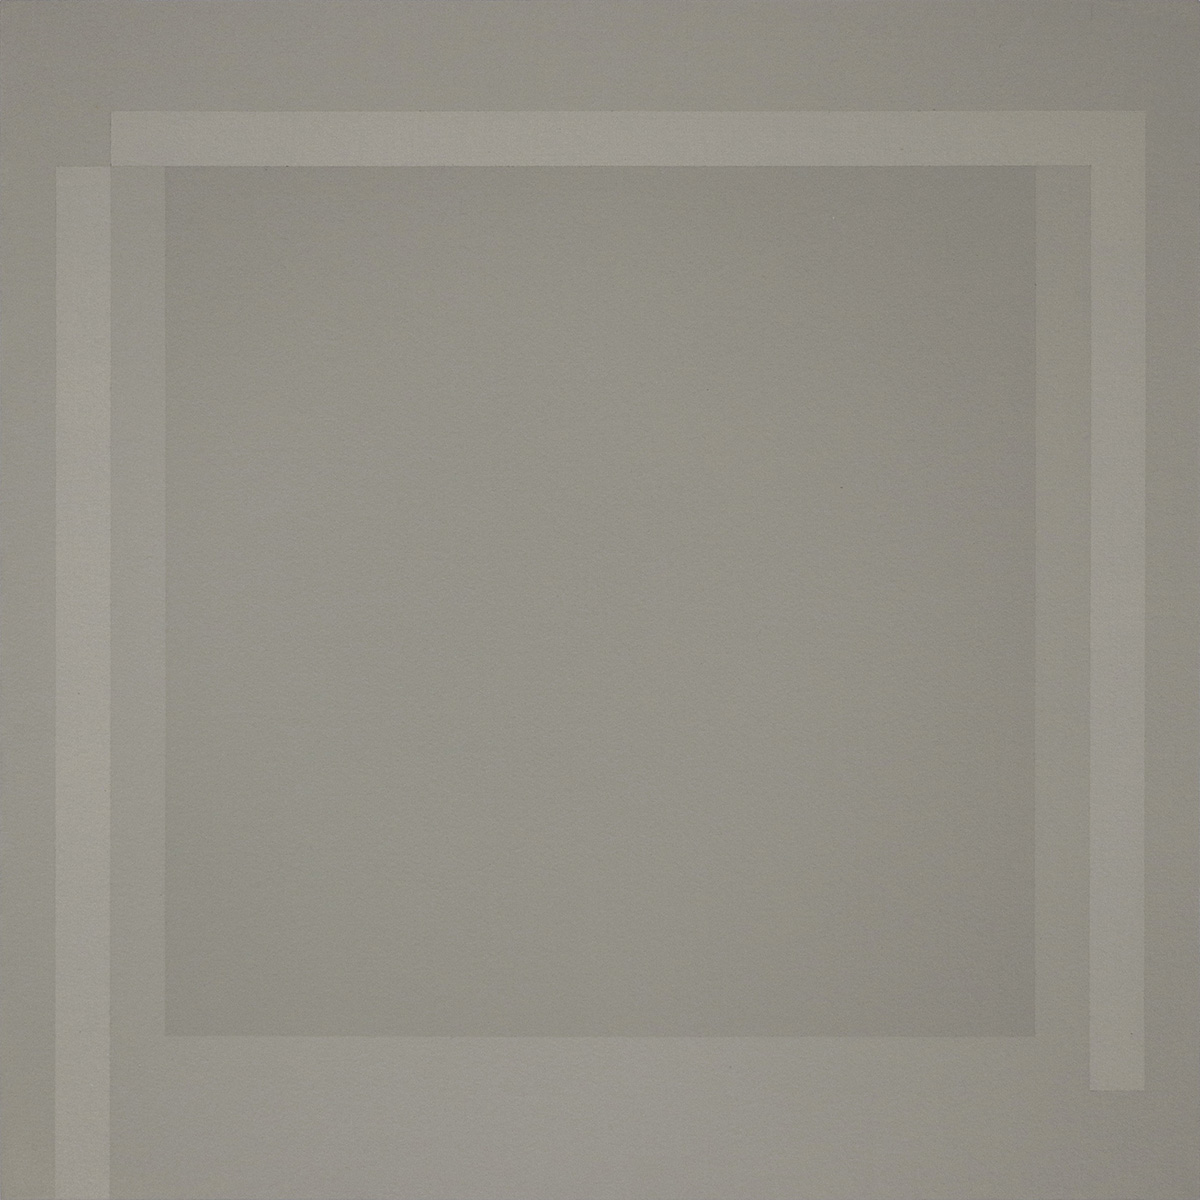 Dimension 39 (Grau), 200655 x 55 cmAcryl auf Papier, auf Auludibond